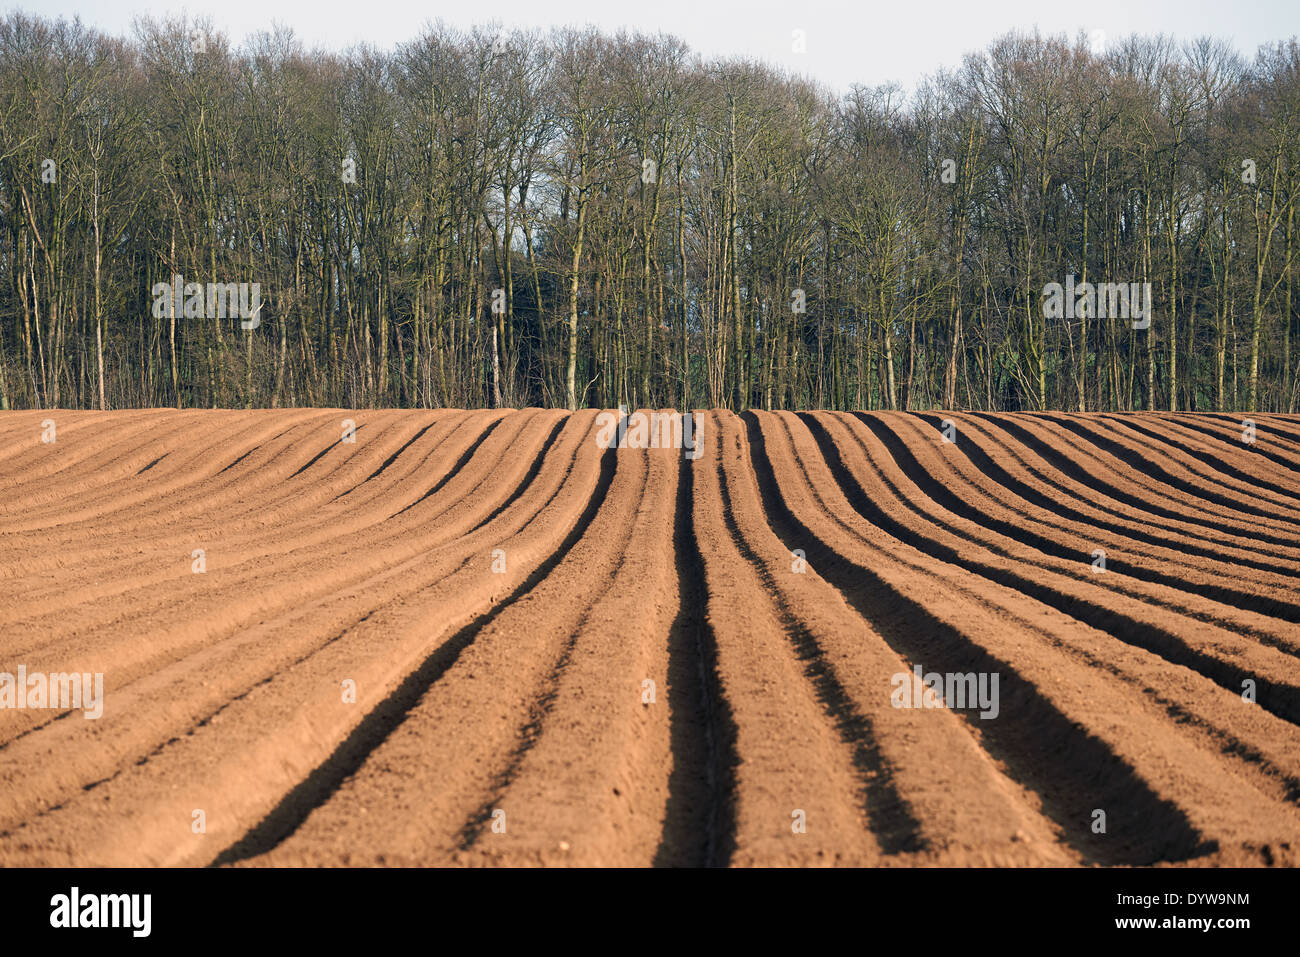 Ackerland mit Kartoffeln bepflanzt Stockfoto